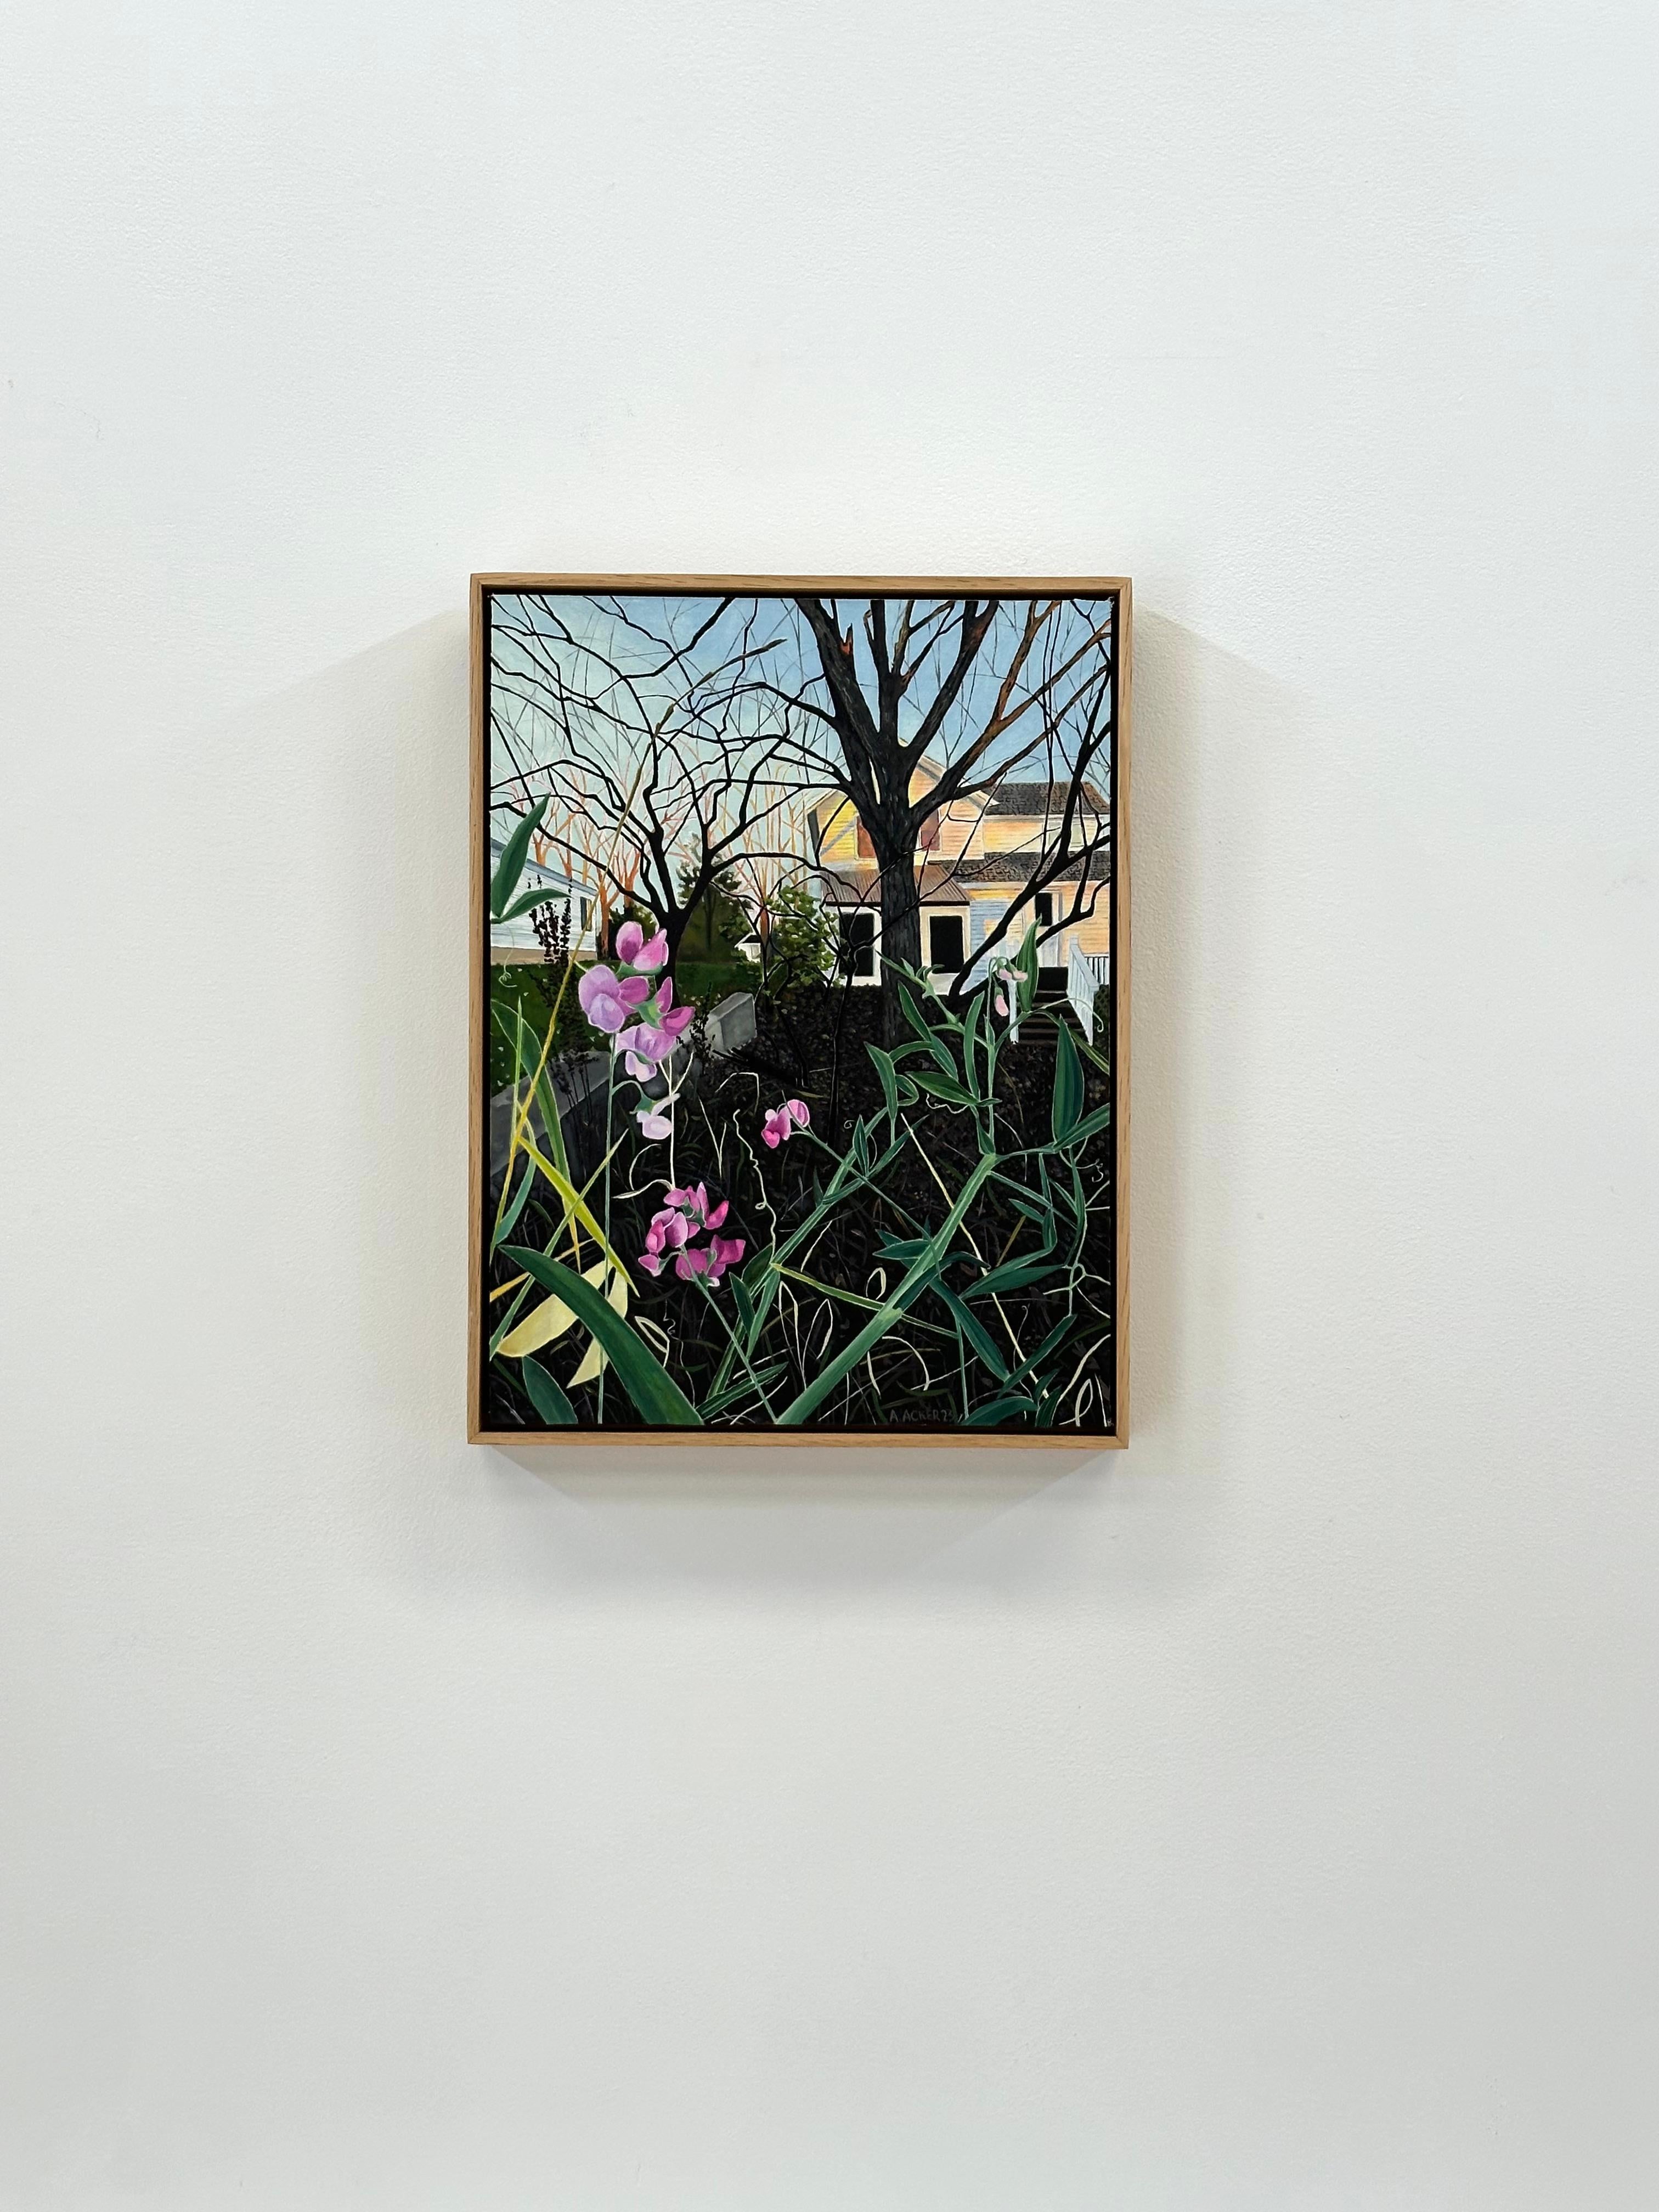 November Bloom, Ivory House, Blue Sky, Trees, Magenta Pink Flowers, Backyard - Contemporary Painting by Amanda Acker